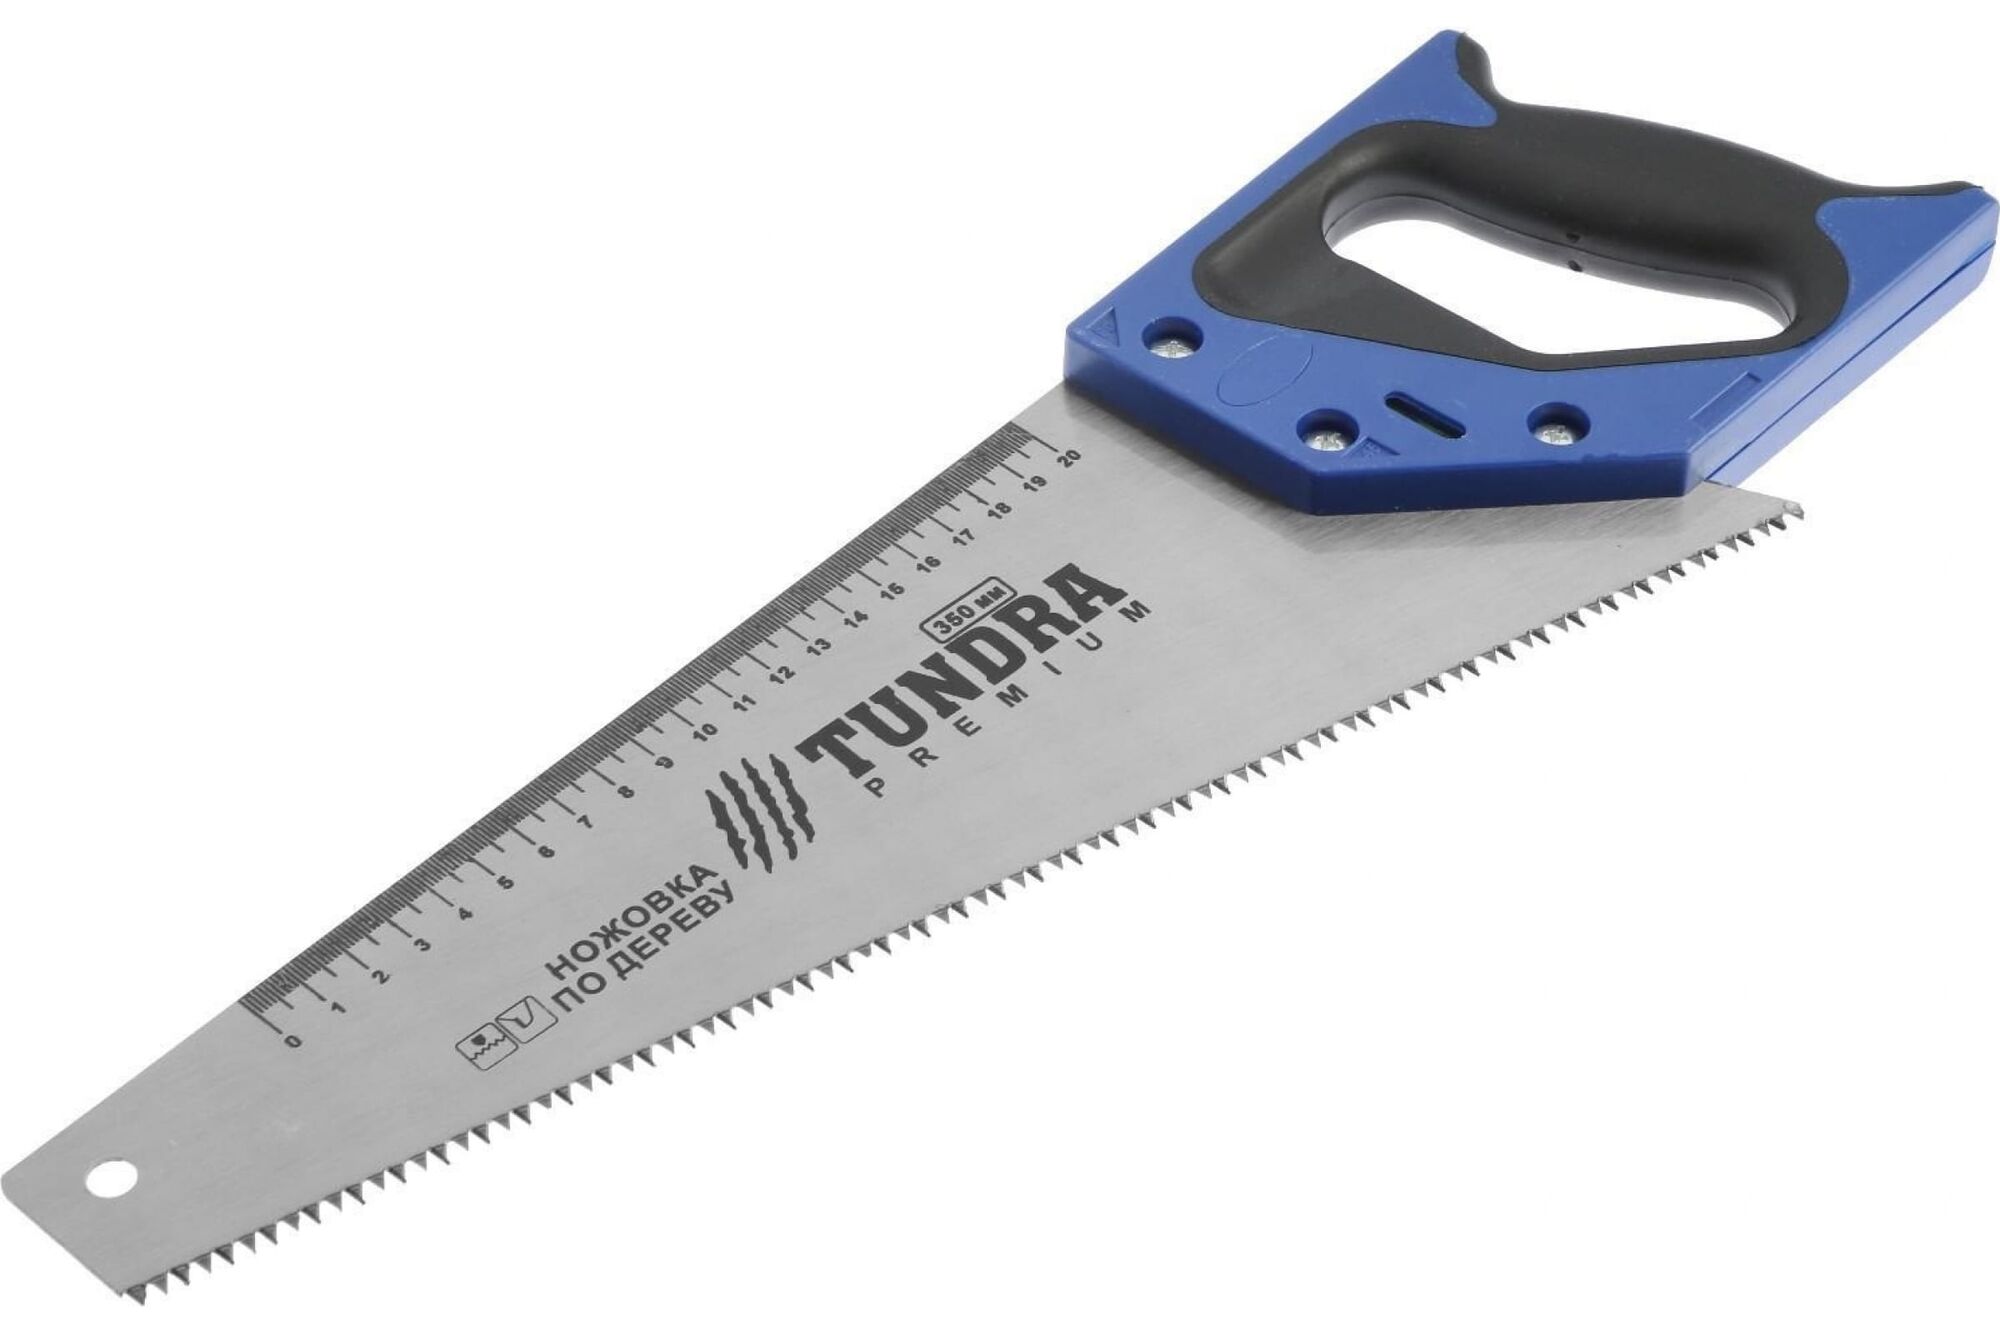 Ножовка по дереву TUNDRA 2К рукоятка, 2D заточка, каленый зуб, 7-8 TPI, 450 мм 5155400